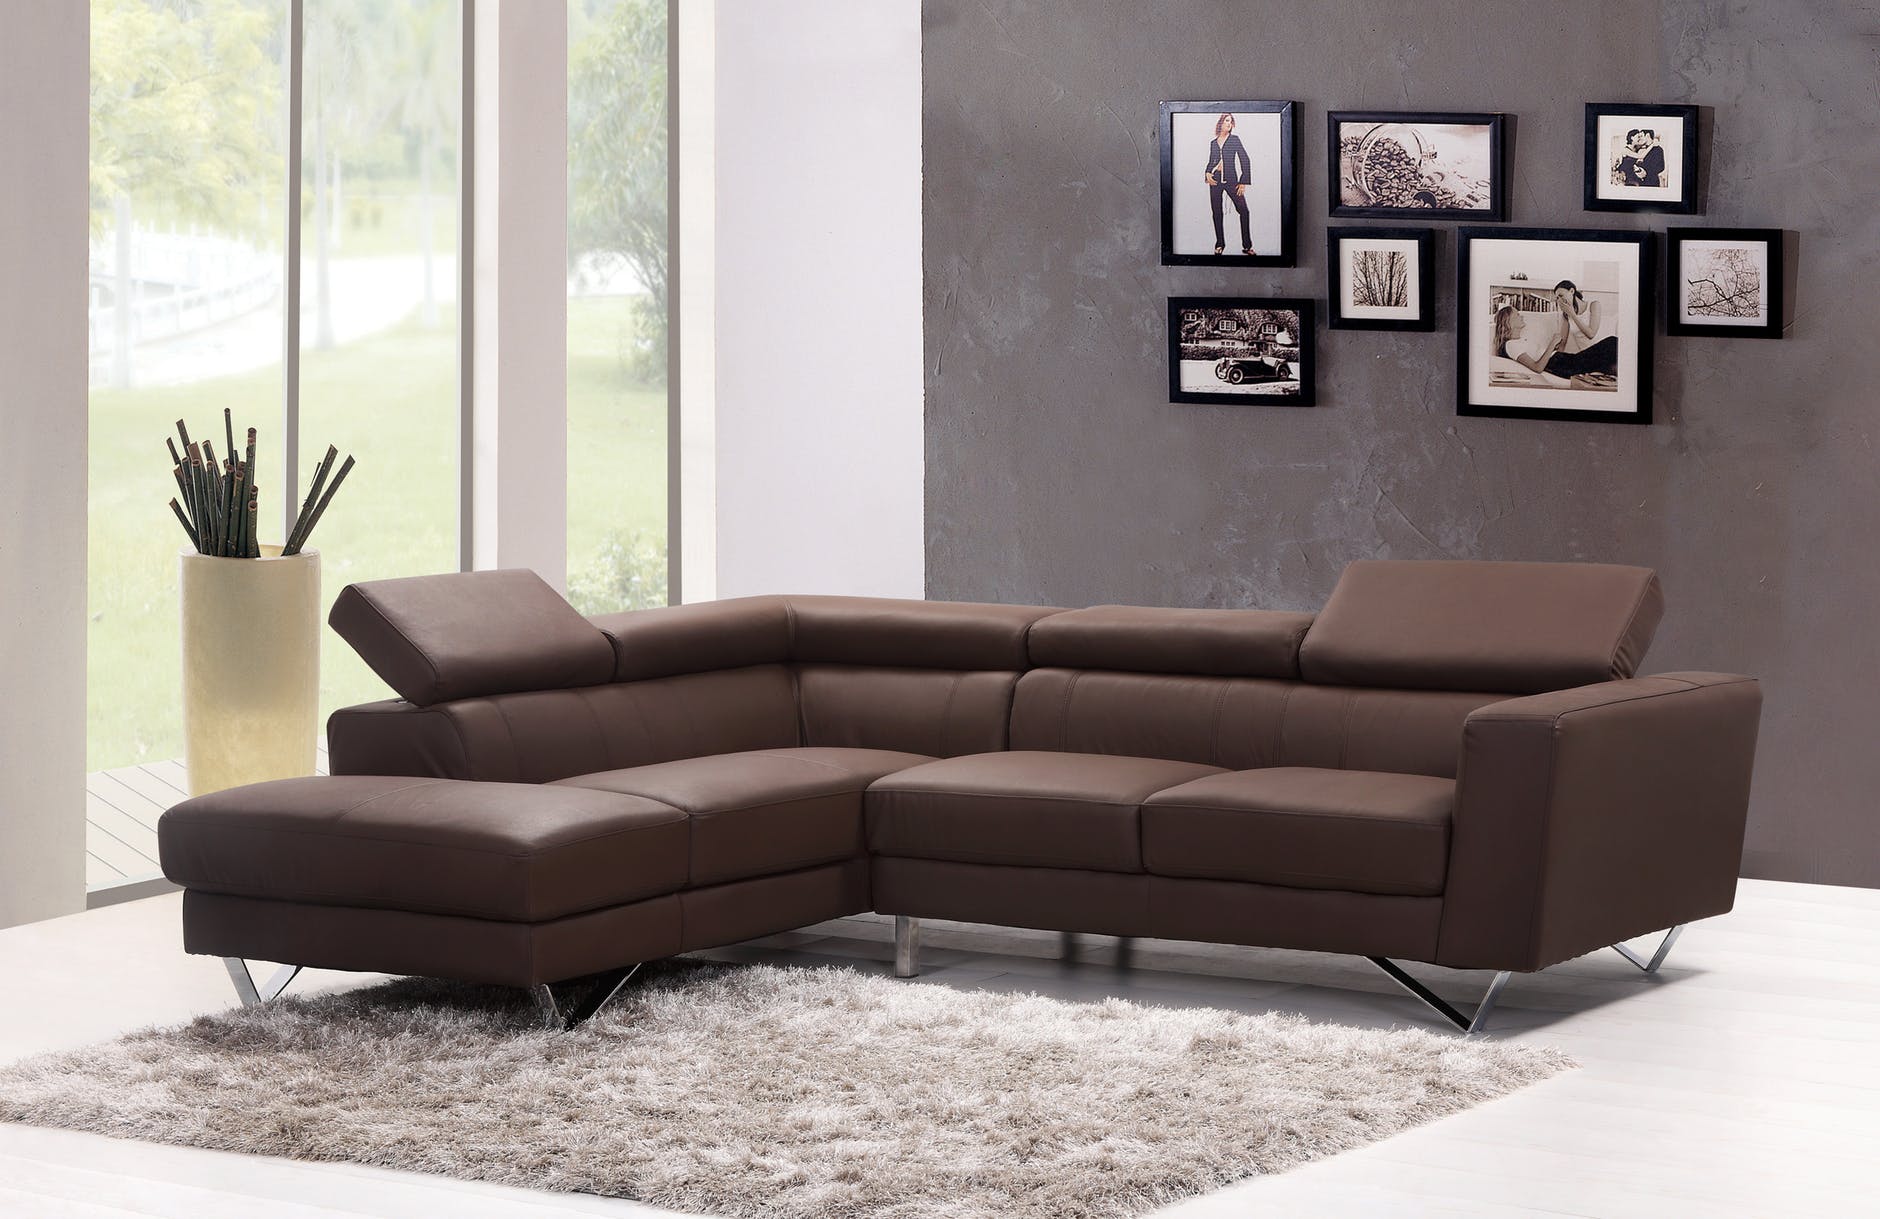 5 Things On Choosing Sofa Set Designs For A Small Living Room - WorthvieW